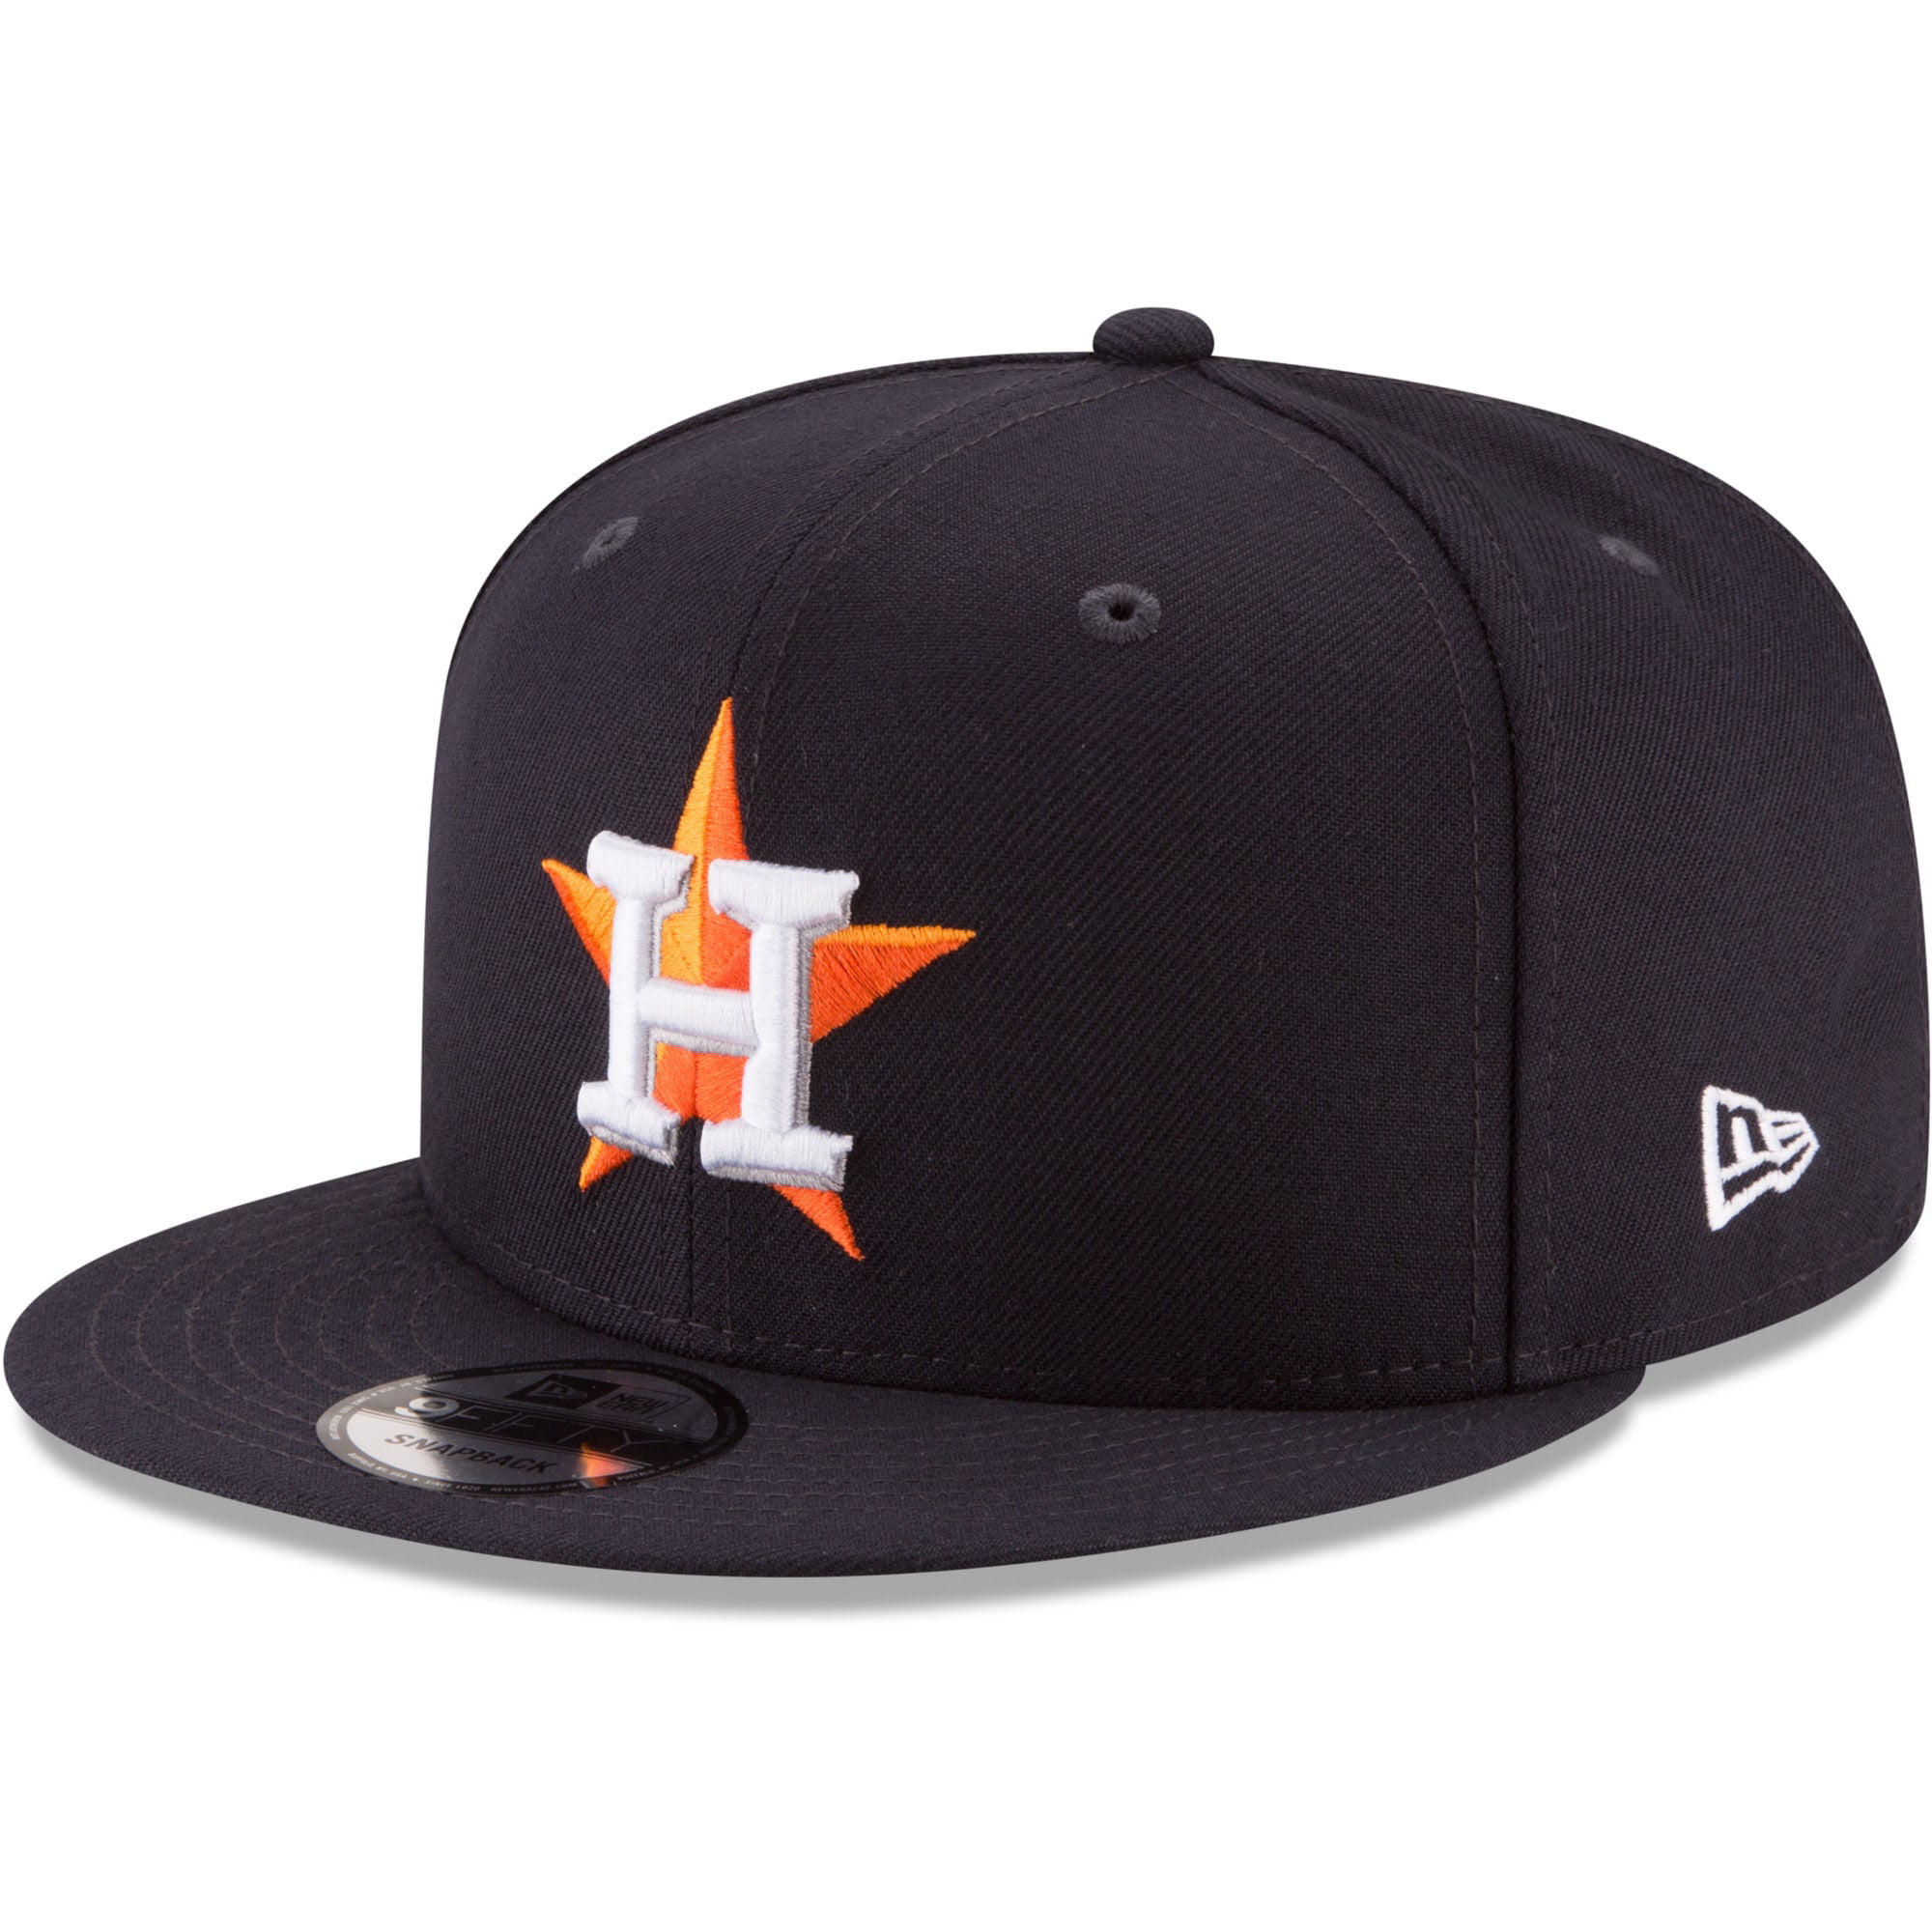 Men's New Era Navy Houston Astros Team Color 9FIFTY Snapback Hat - OSFA